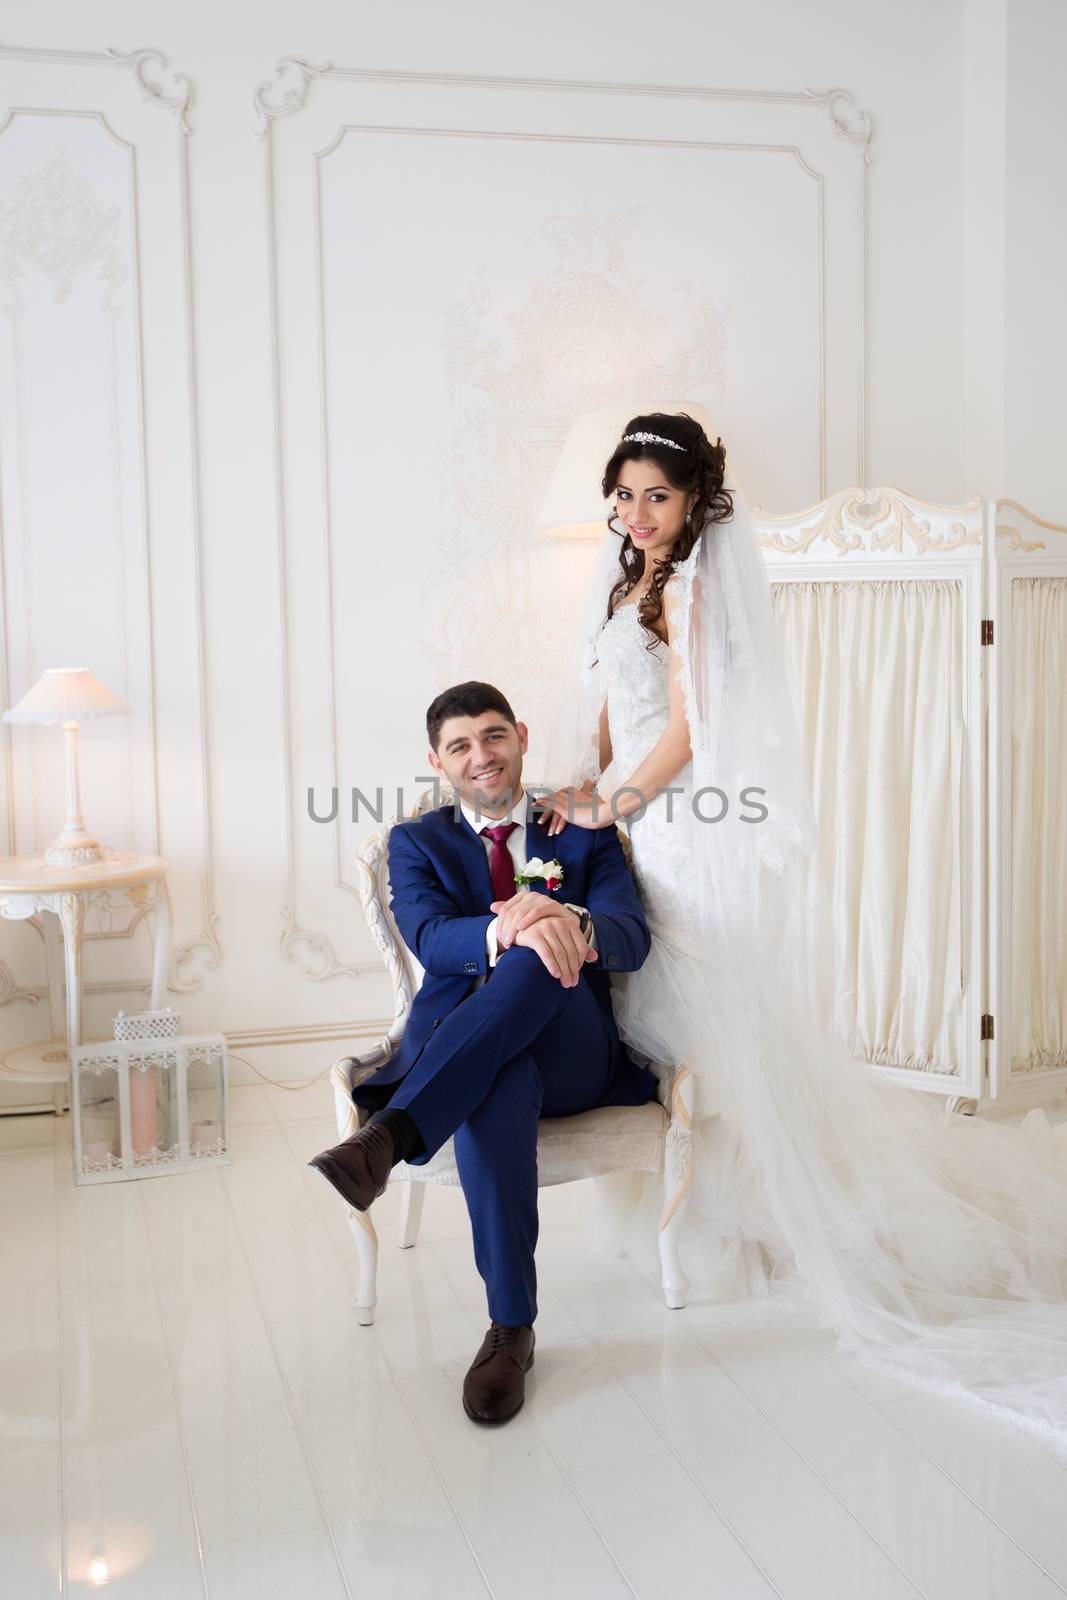 Italian wedding couple by lanser314